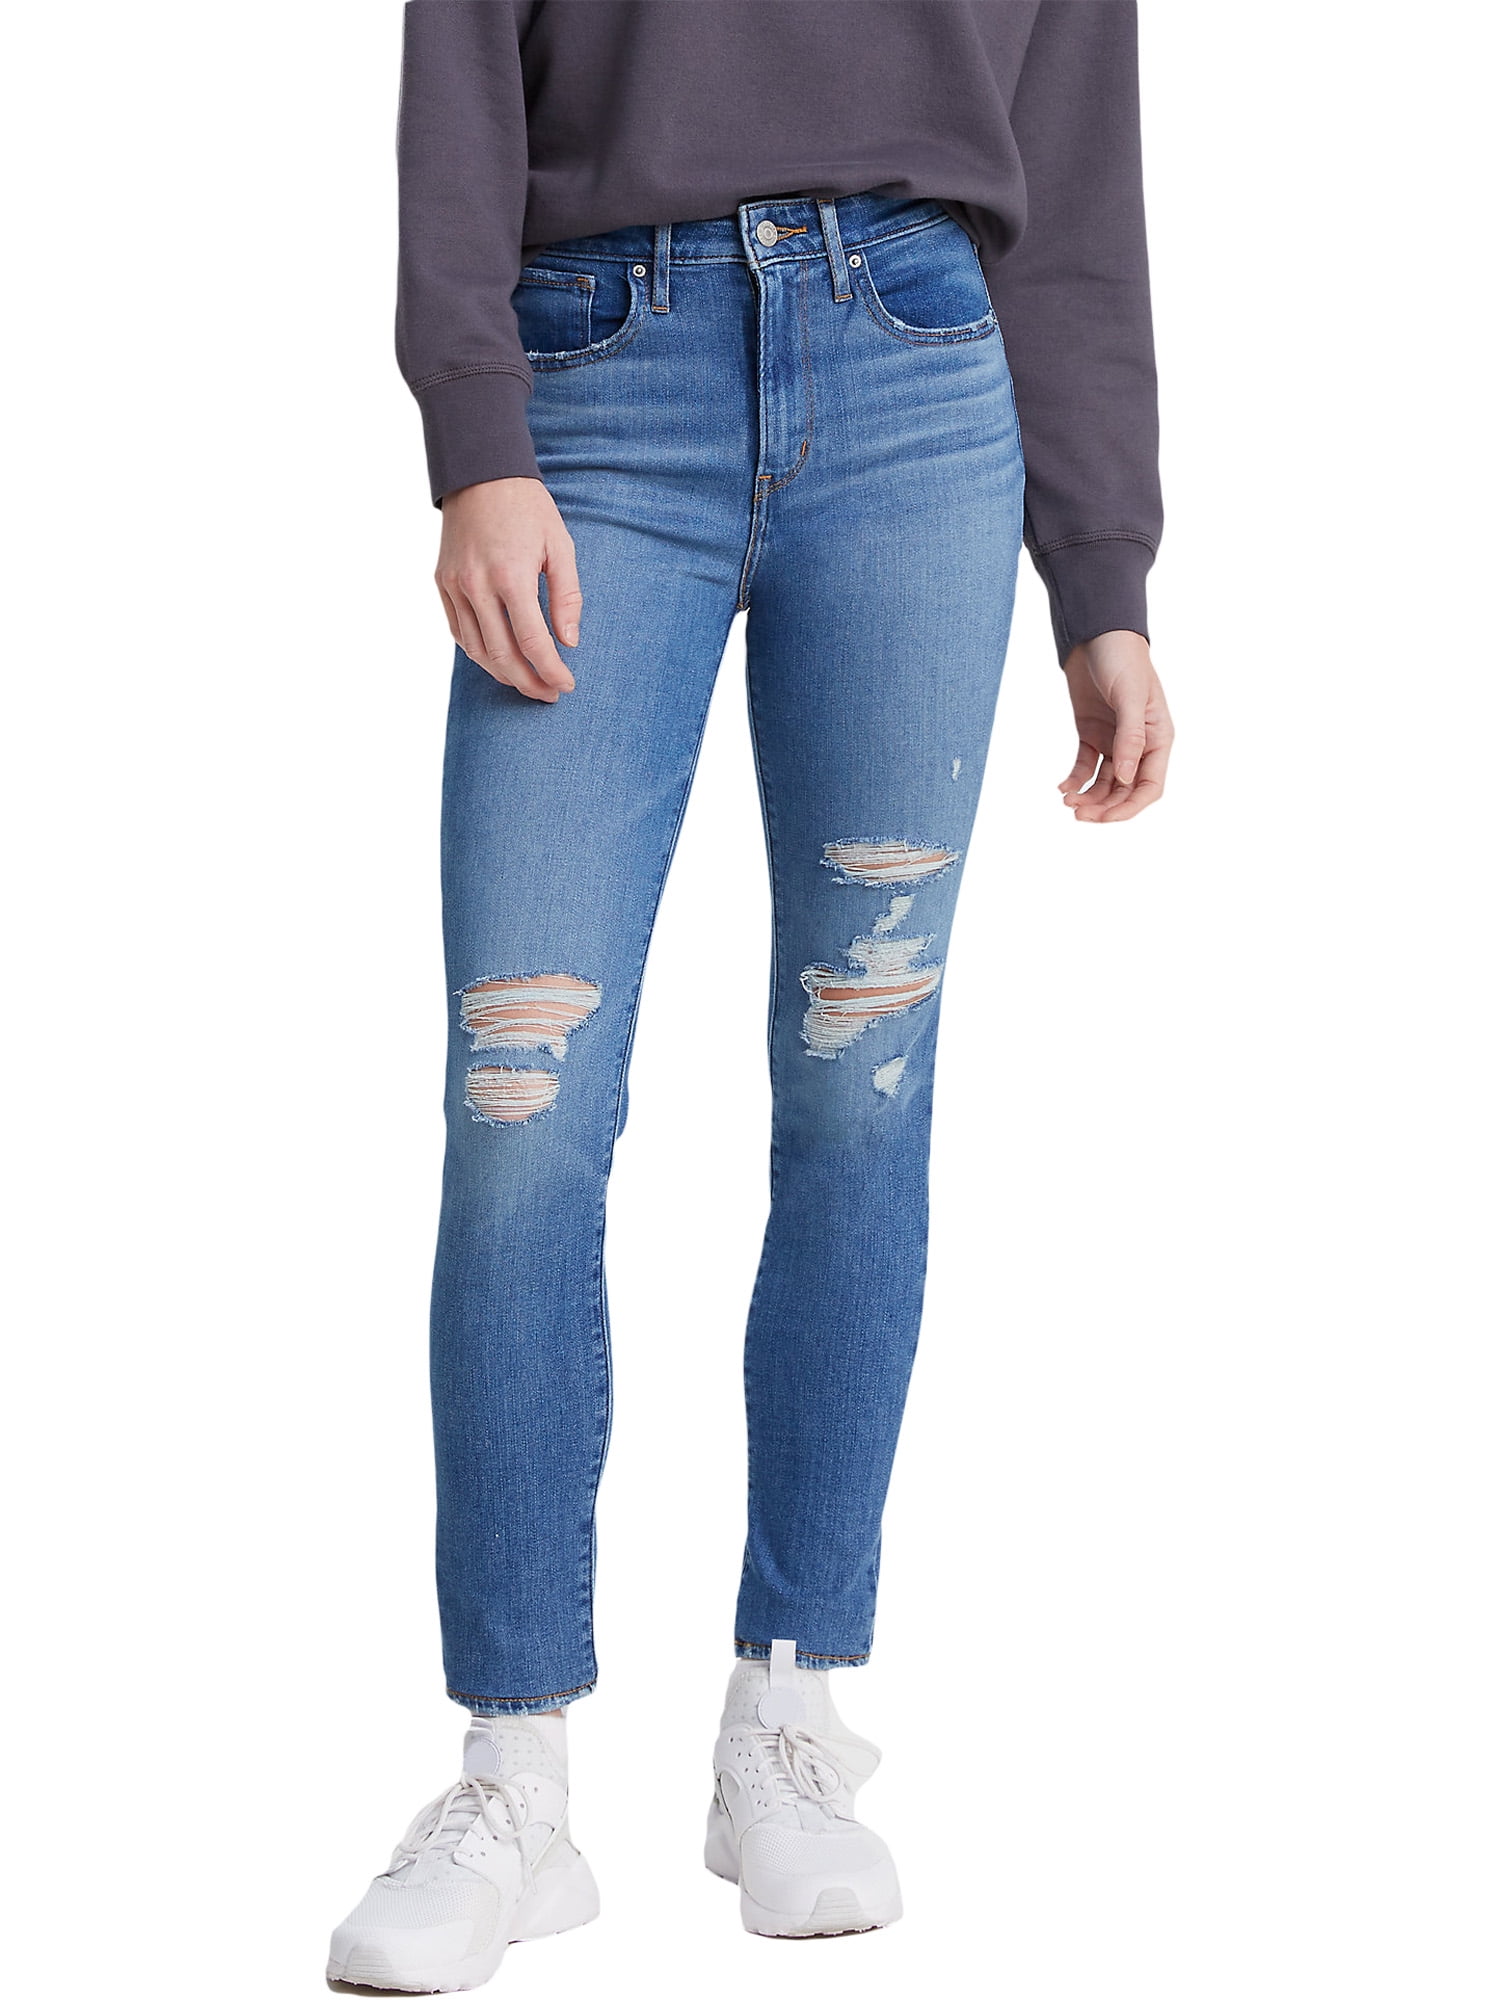 Levi's Original Red Tab Women's 721 High-Rise Skinny Jeans - Walmart.com